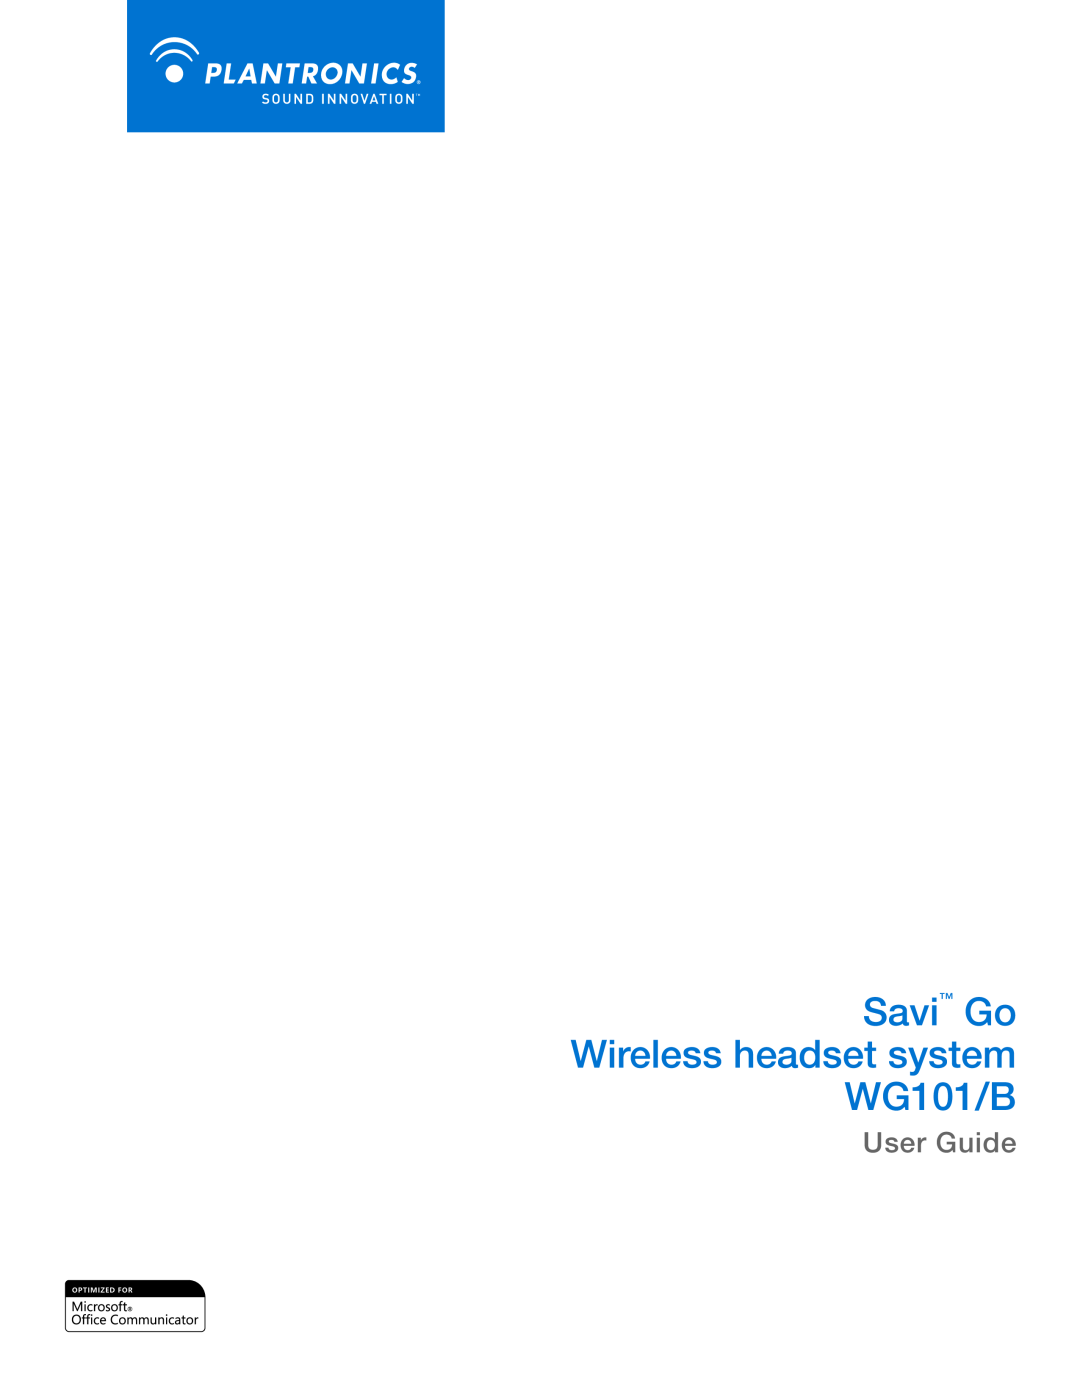 Plantronics manual Savi Go Wireless headset system WG101/B, User Guide 